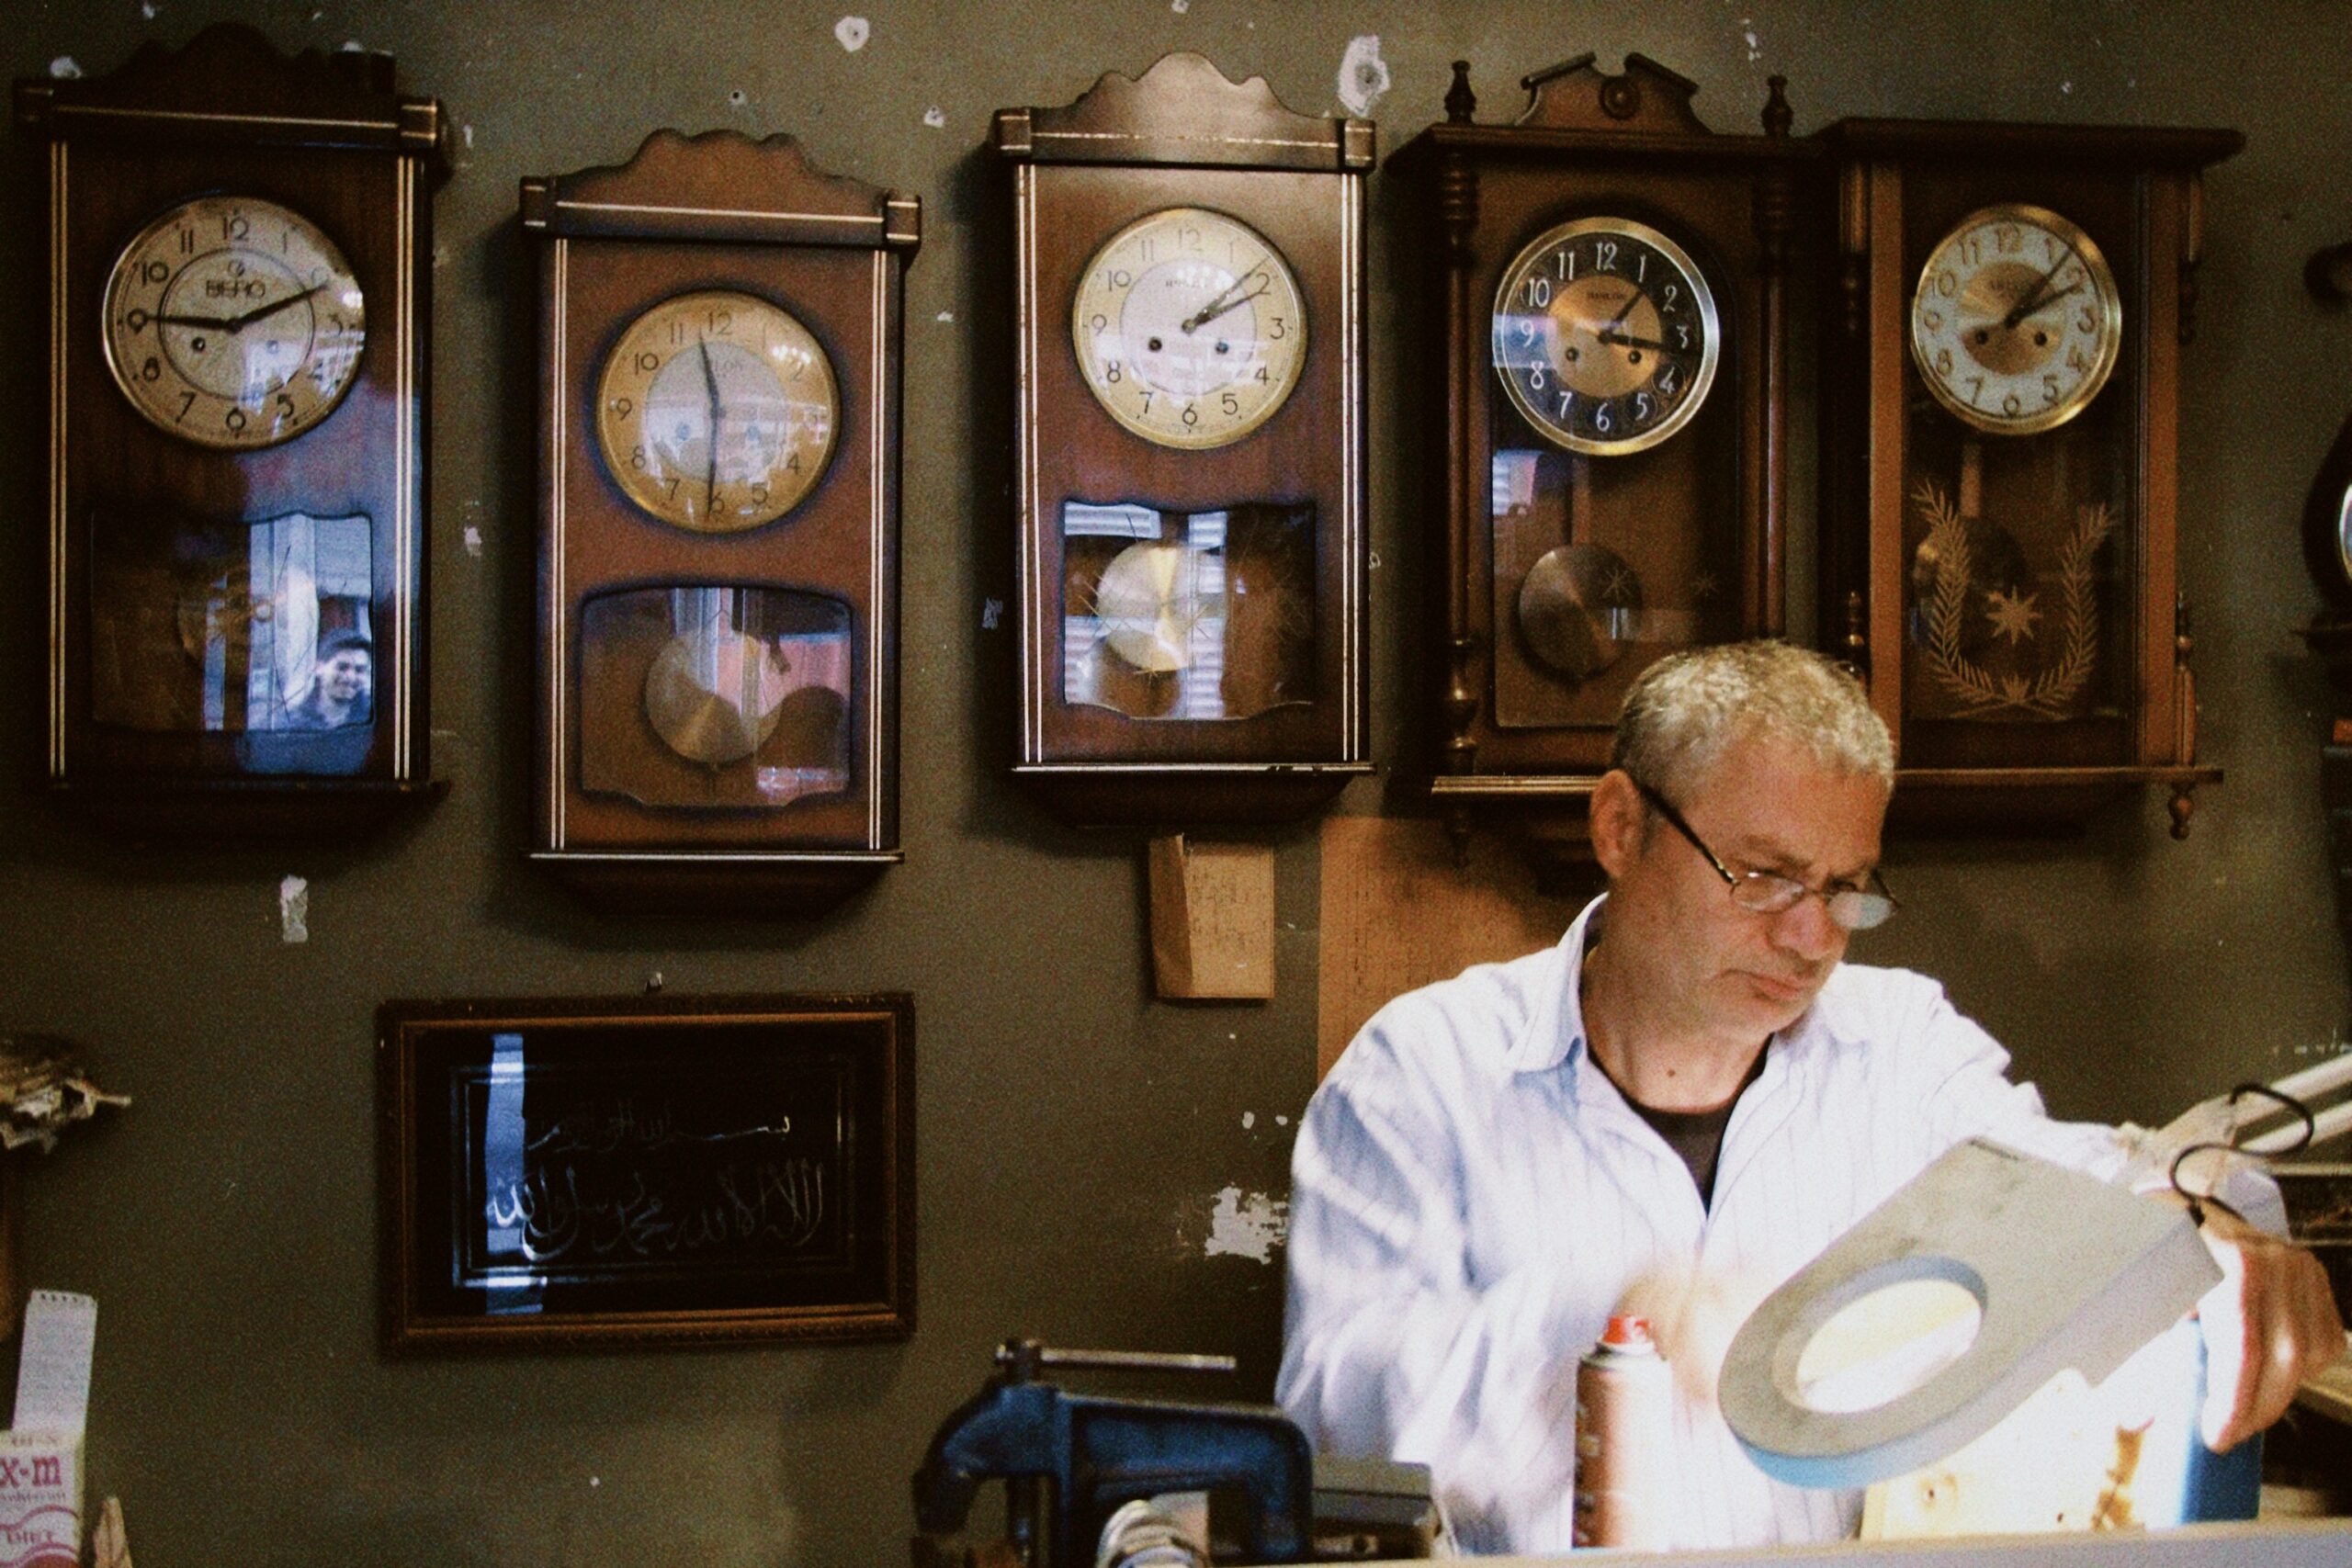 Patek Philippe เทรนพนักงานช่างทำนาฬิกาอย่างไร เพื่อส่งต่อคุณค่าจากรุ่นสู่รุ่น